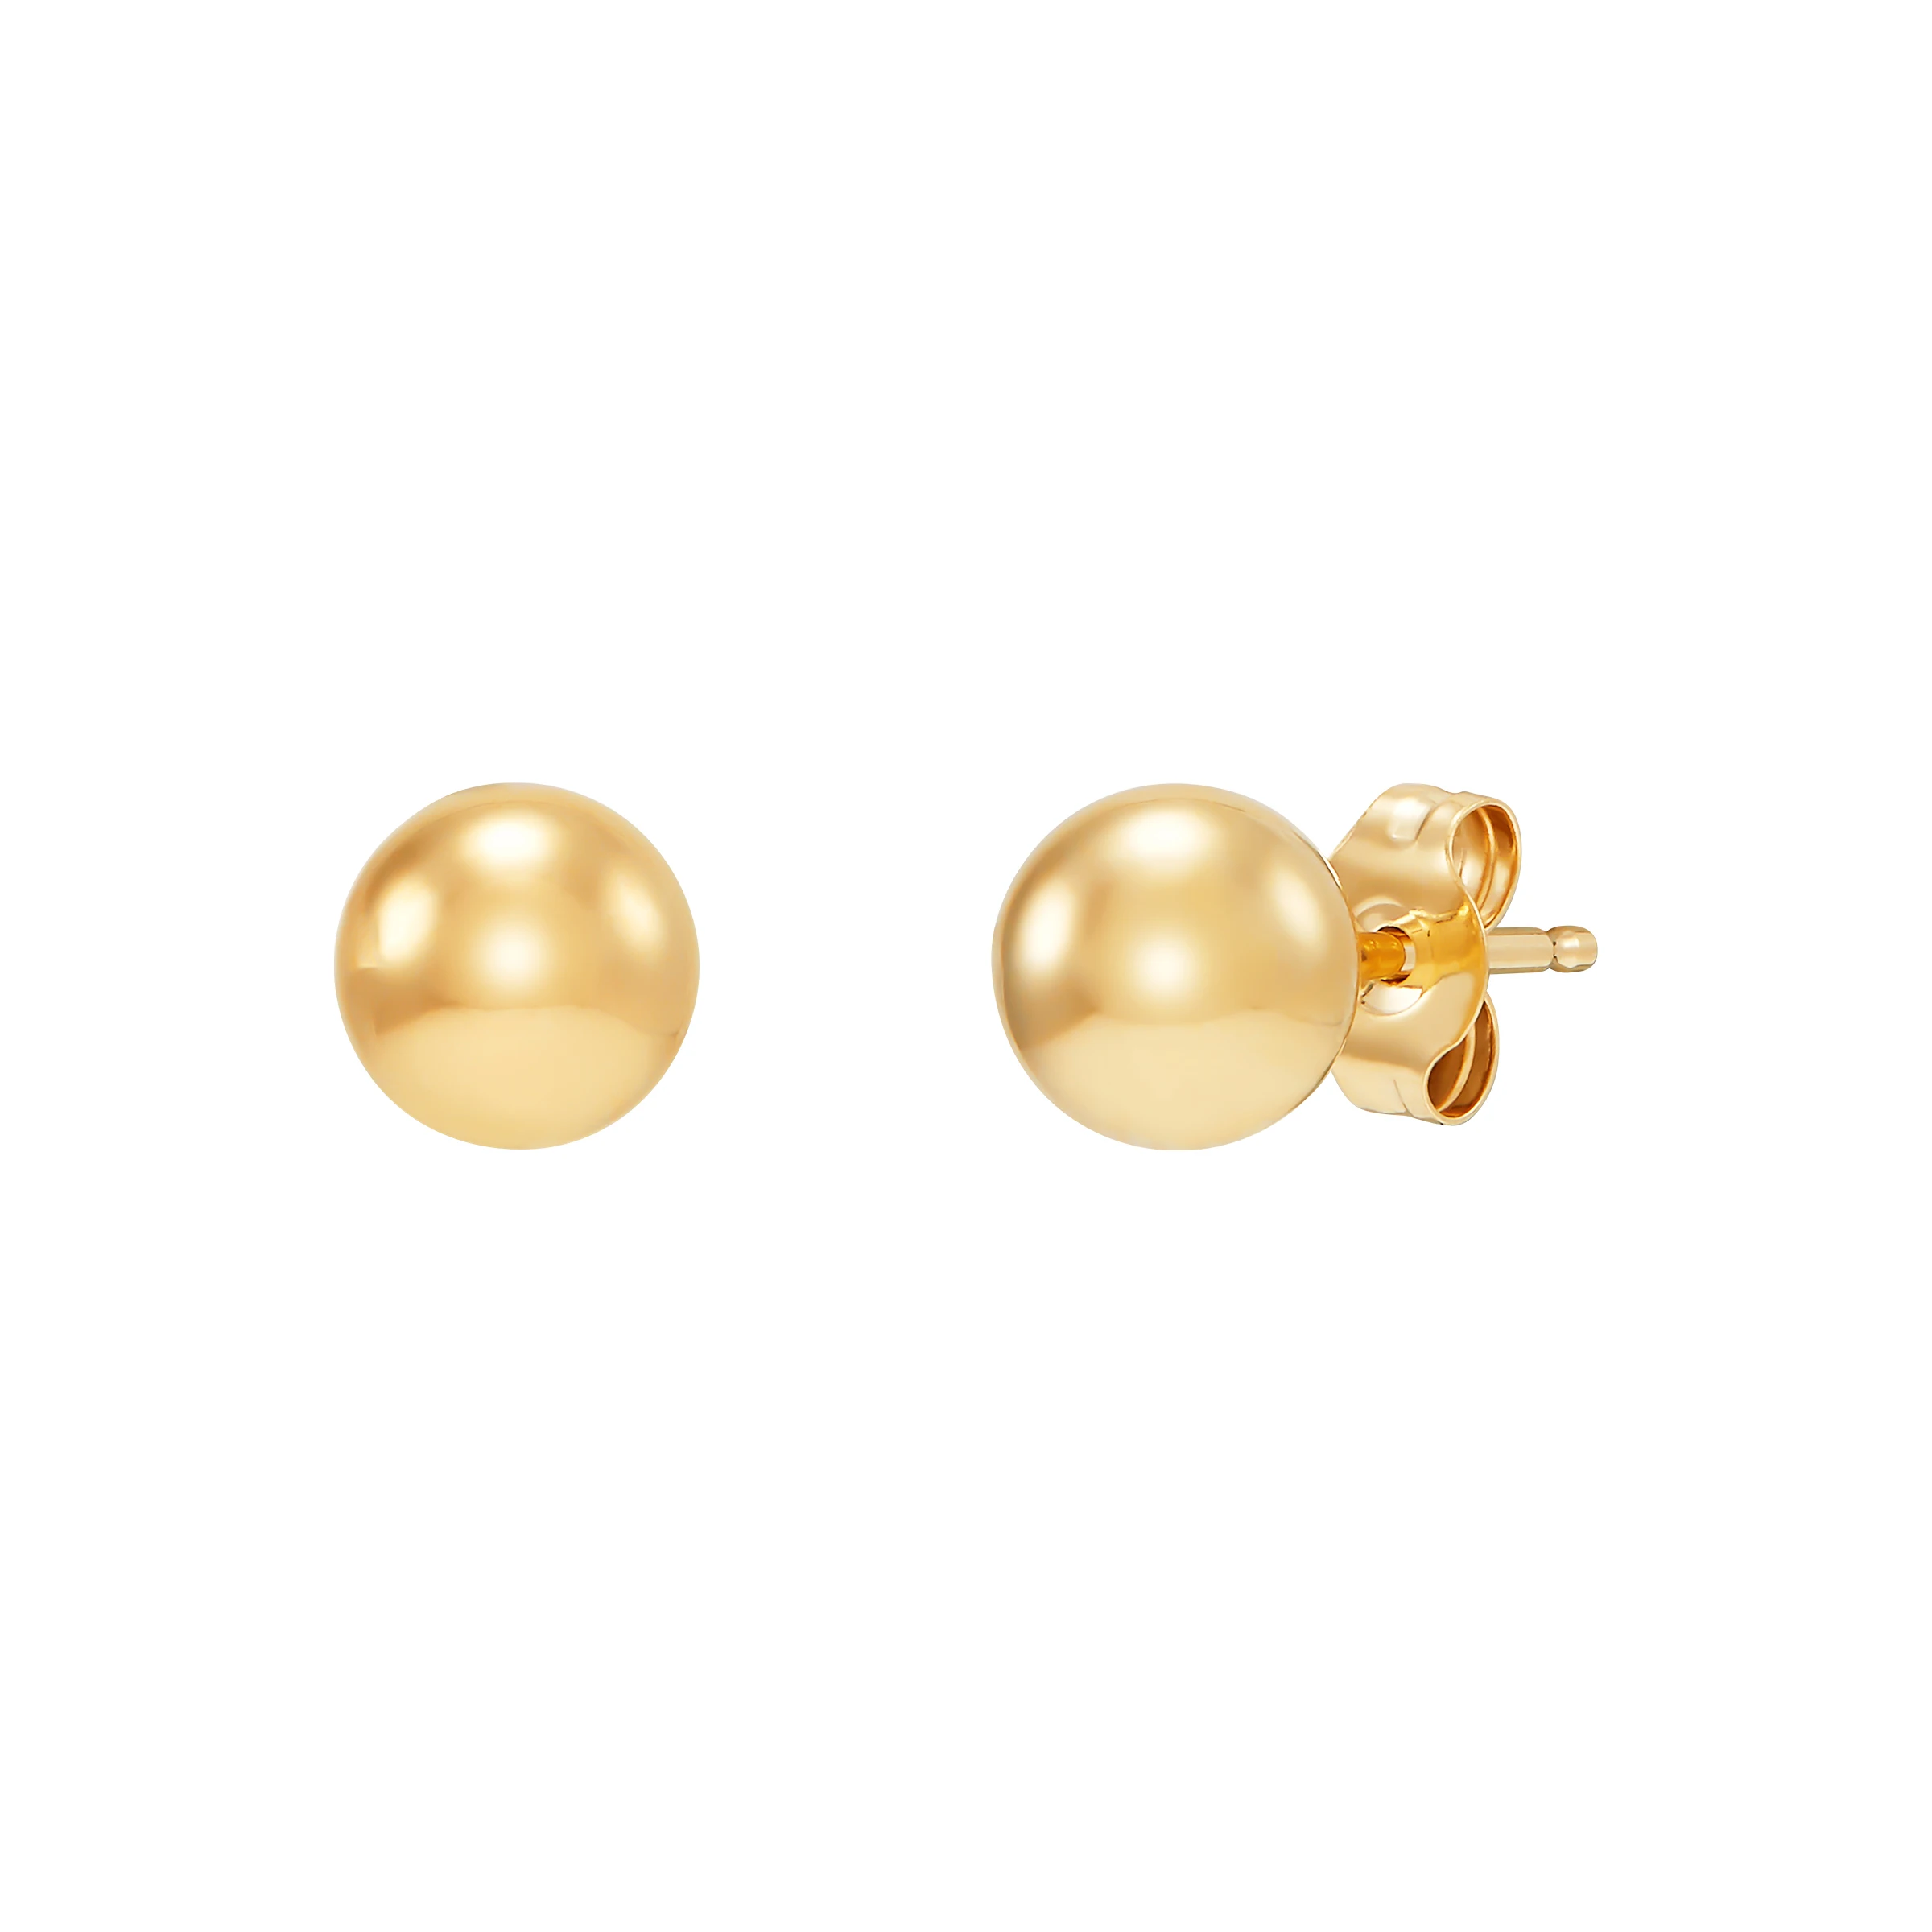 Welry 6 mm Satin Ball Stud Earrings in 14K Yellow Gold